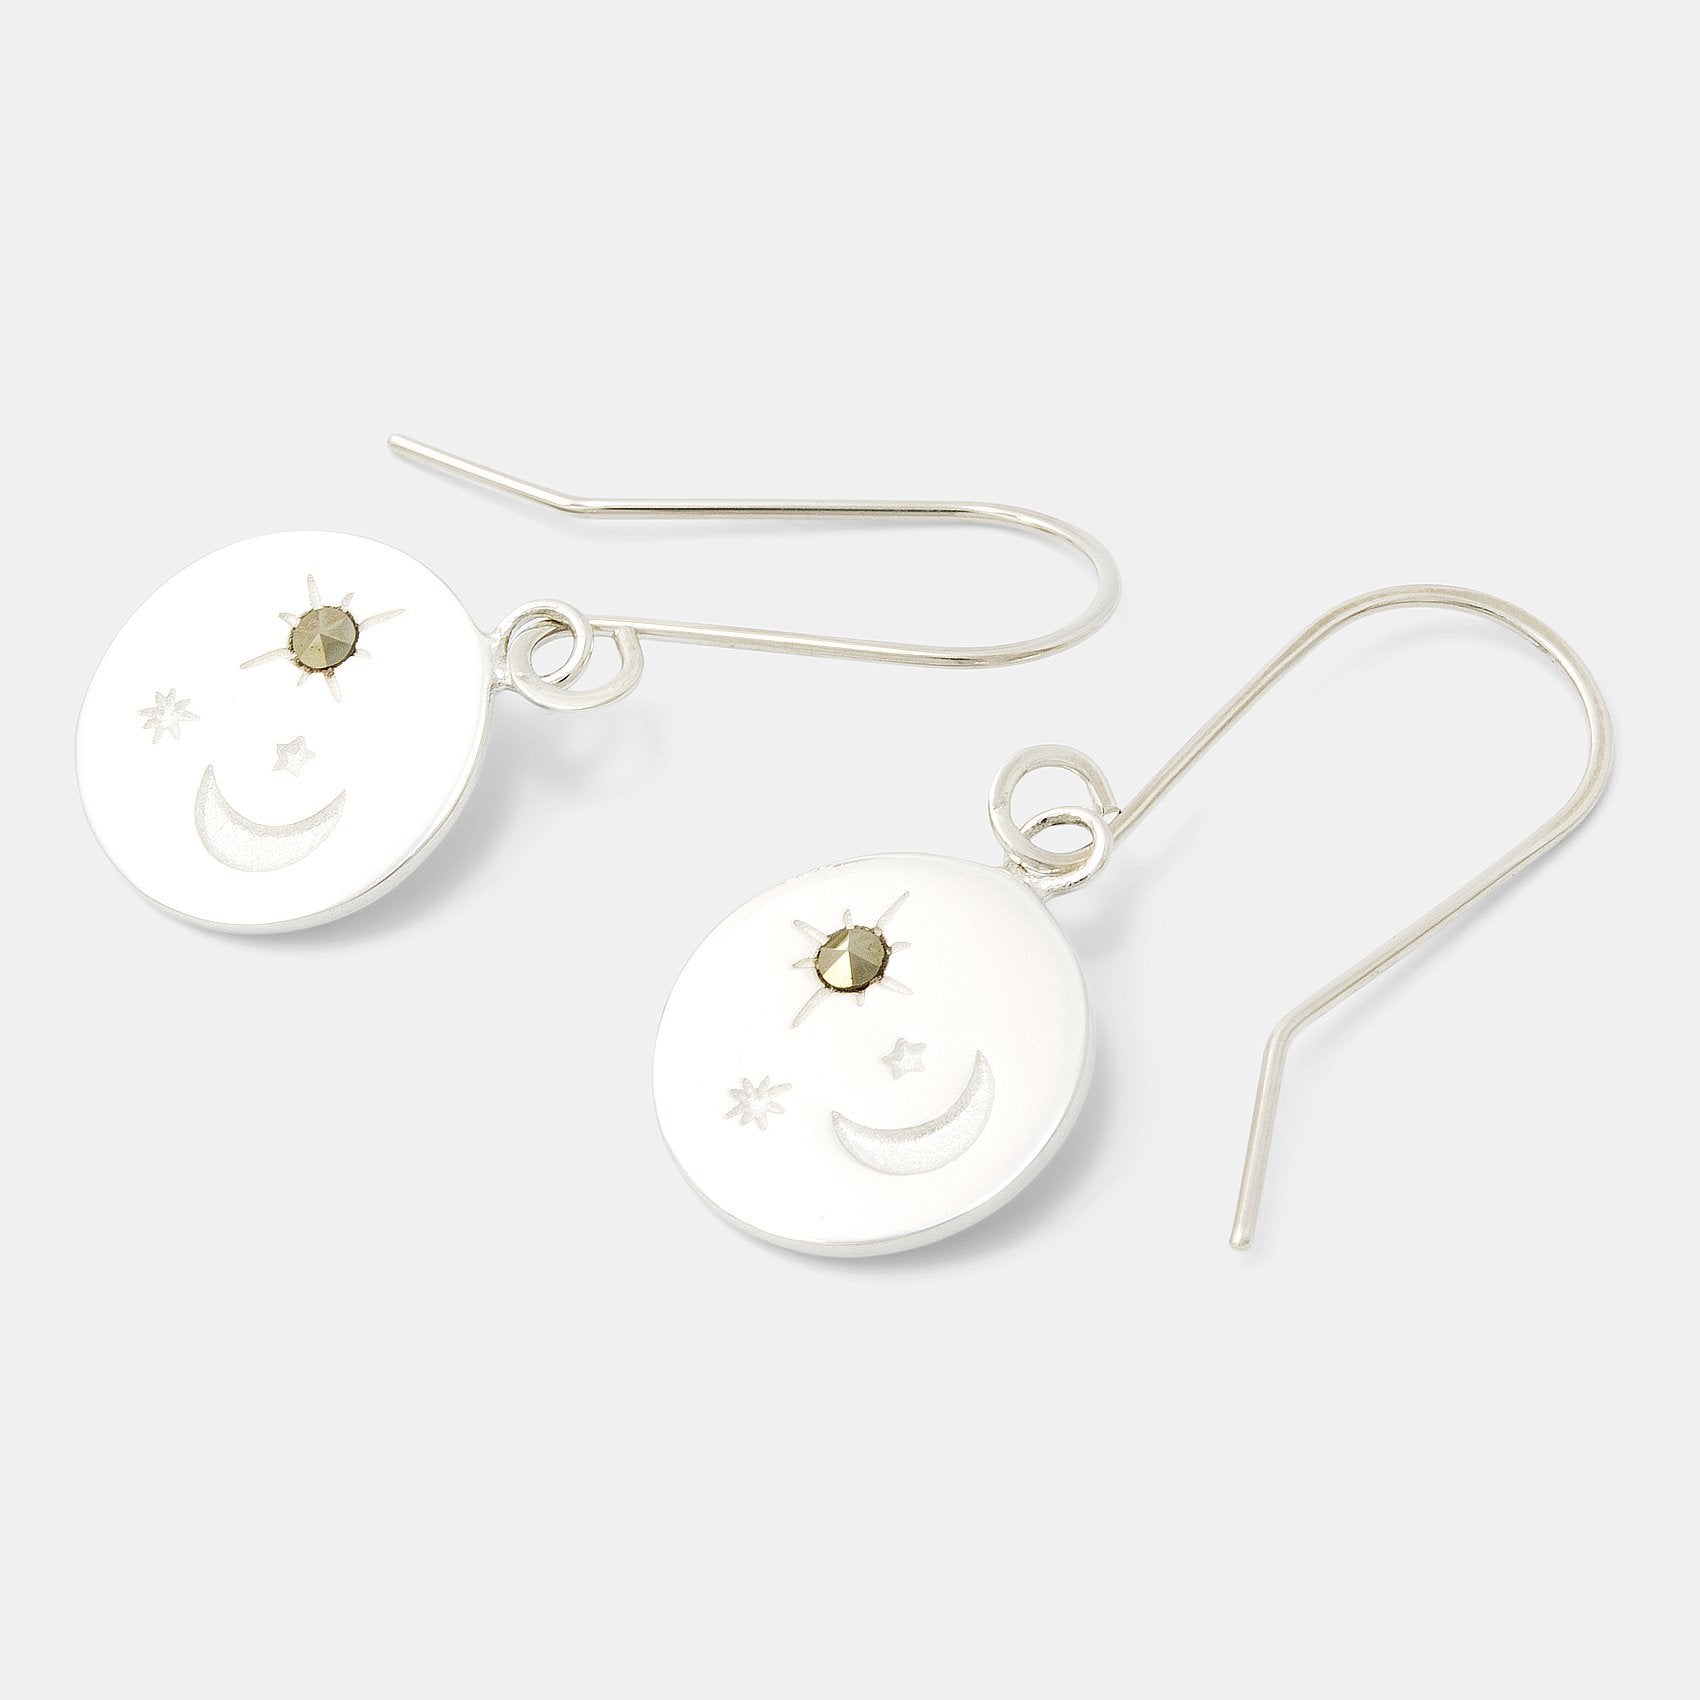 Moon & stars amulet drop earrings - Simone Walsh Jewellery Australia